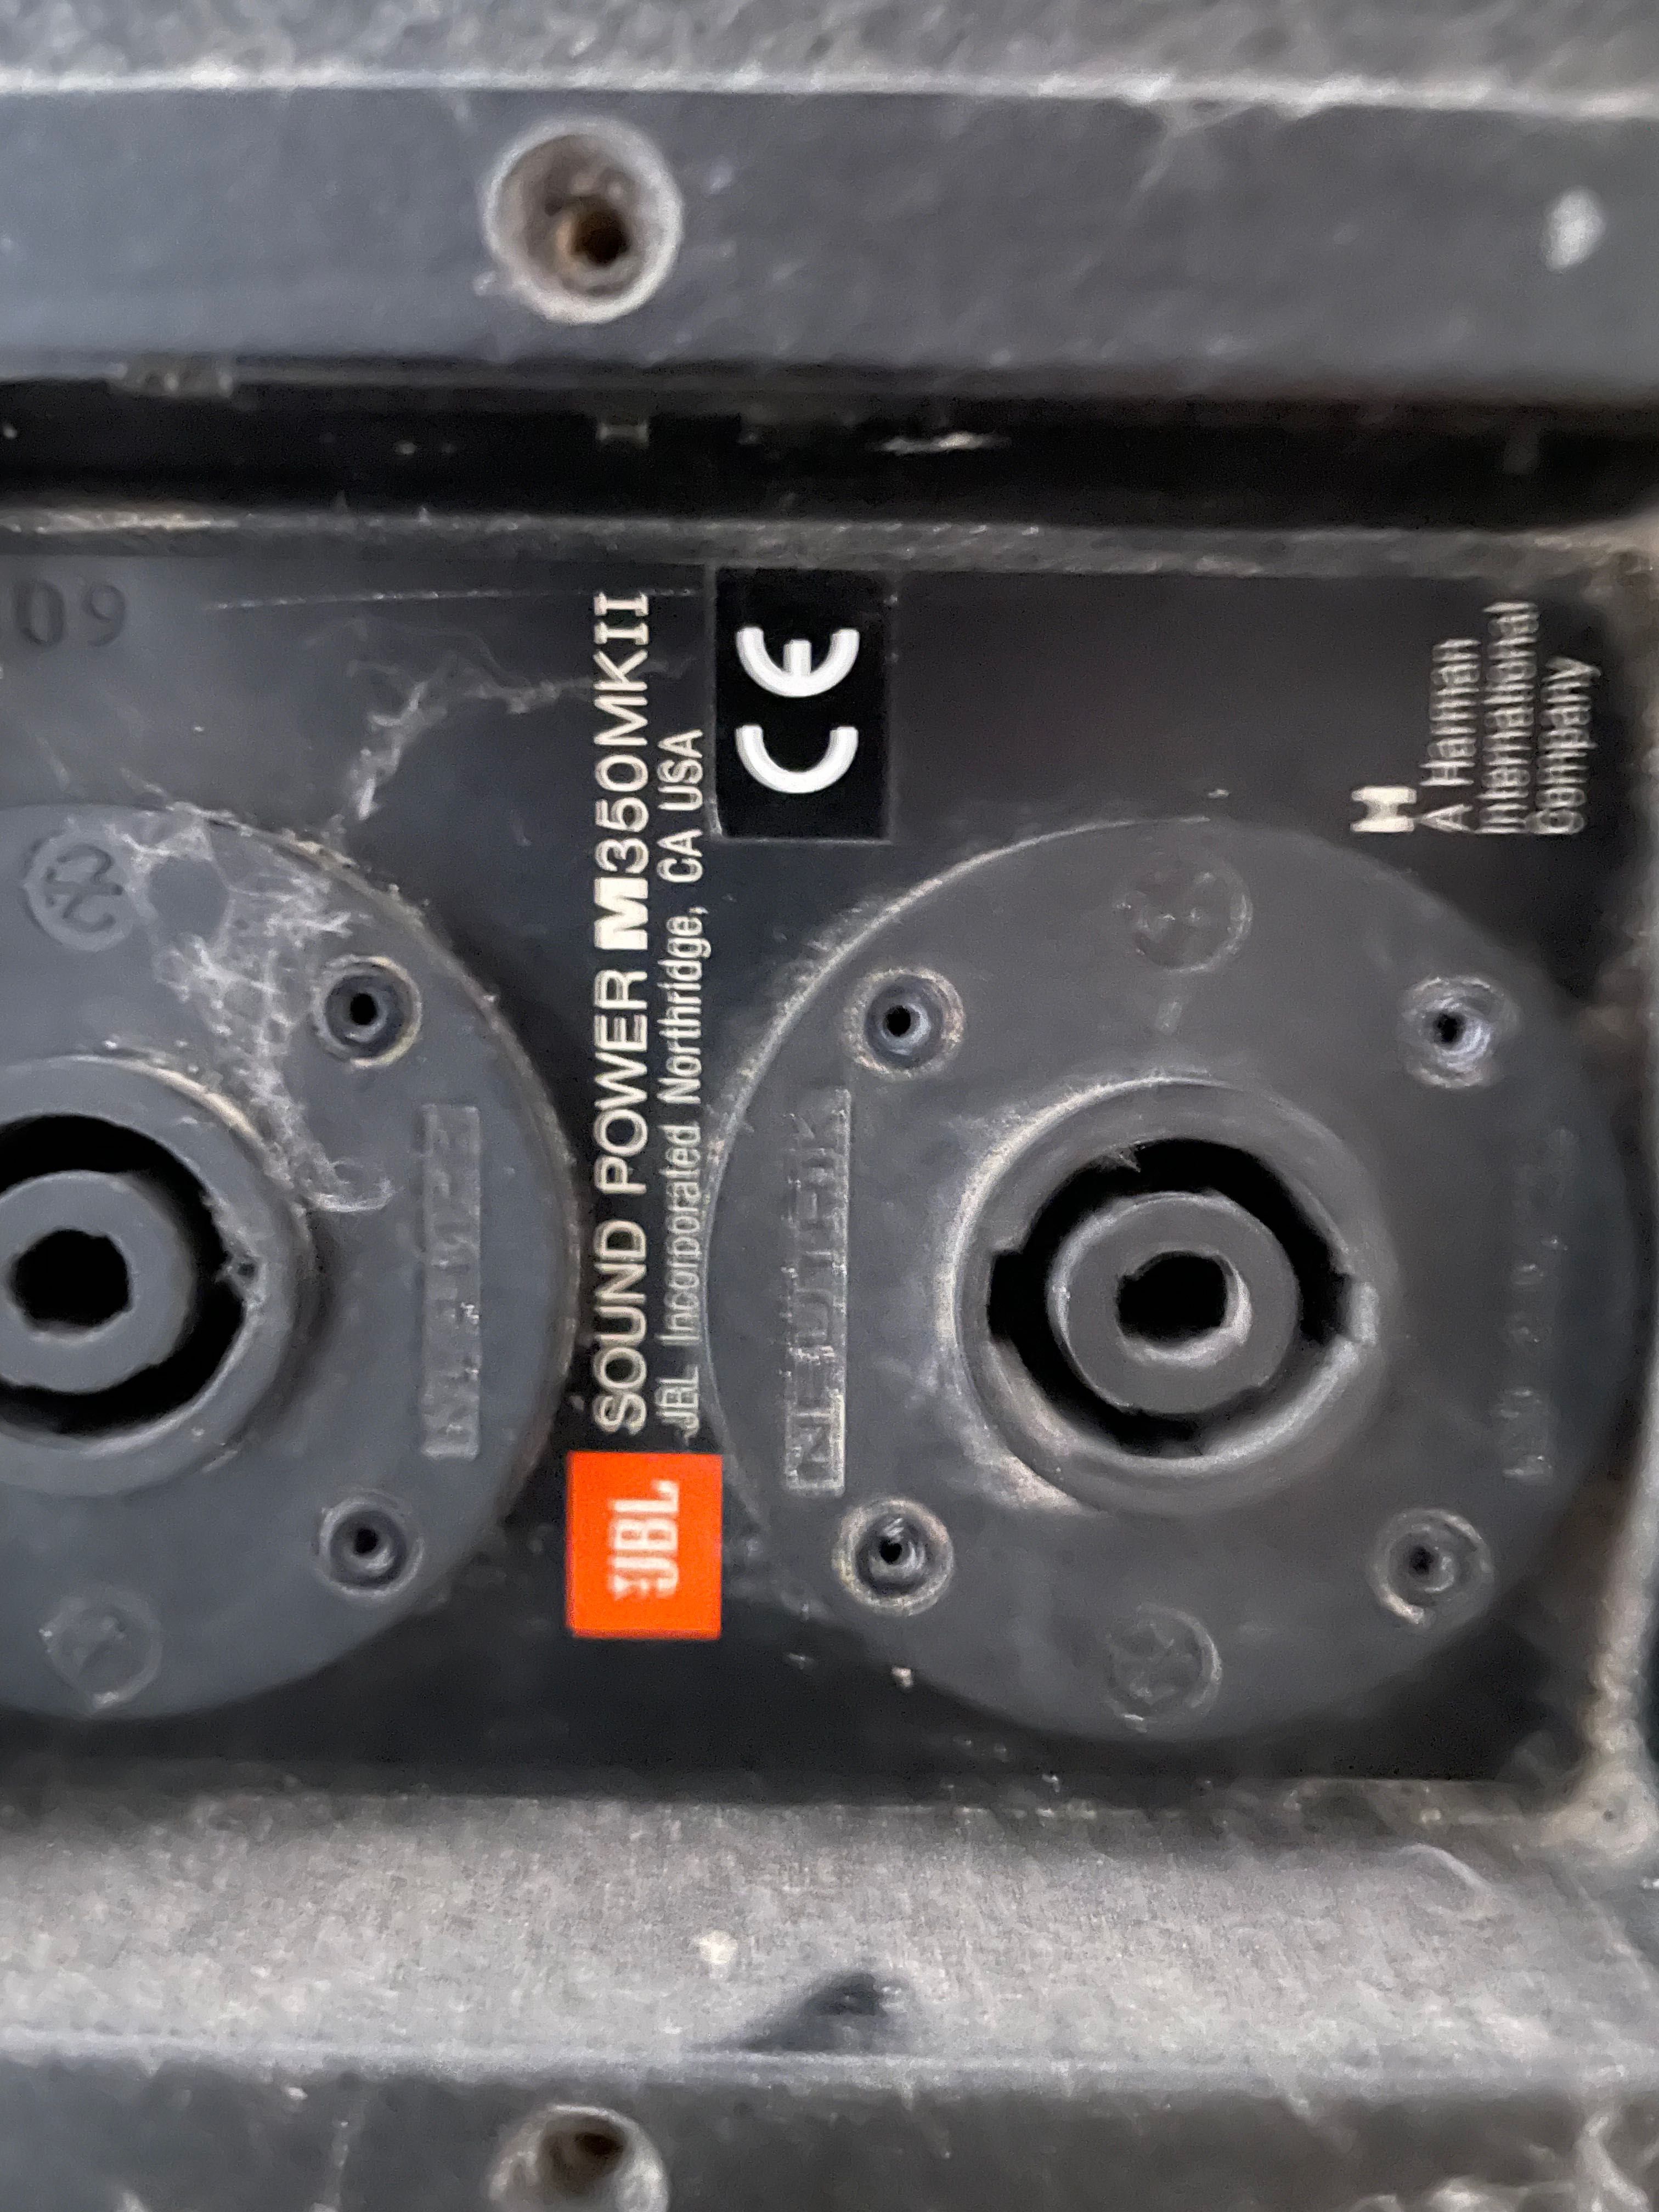 JBL sound power m350 mk2